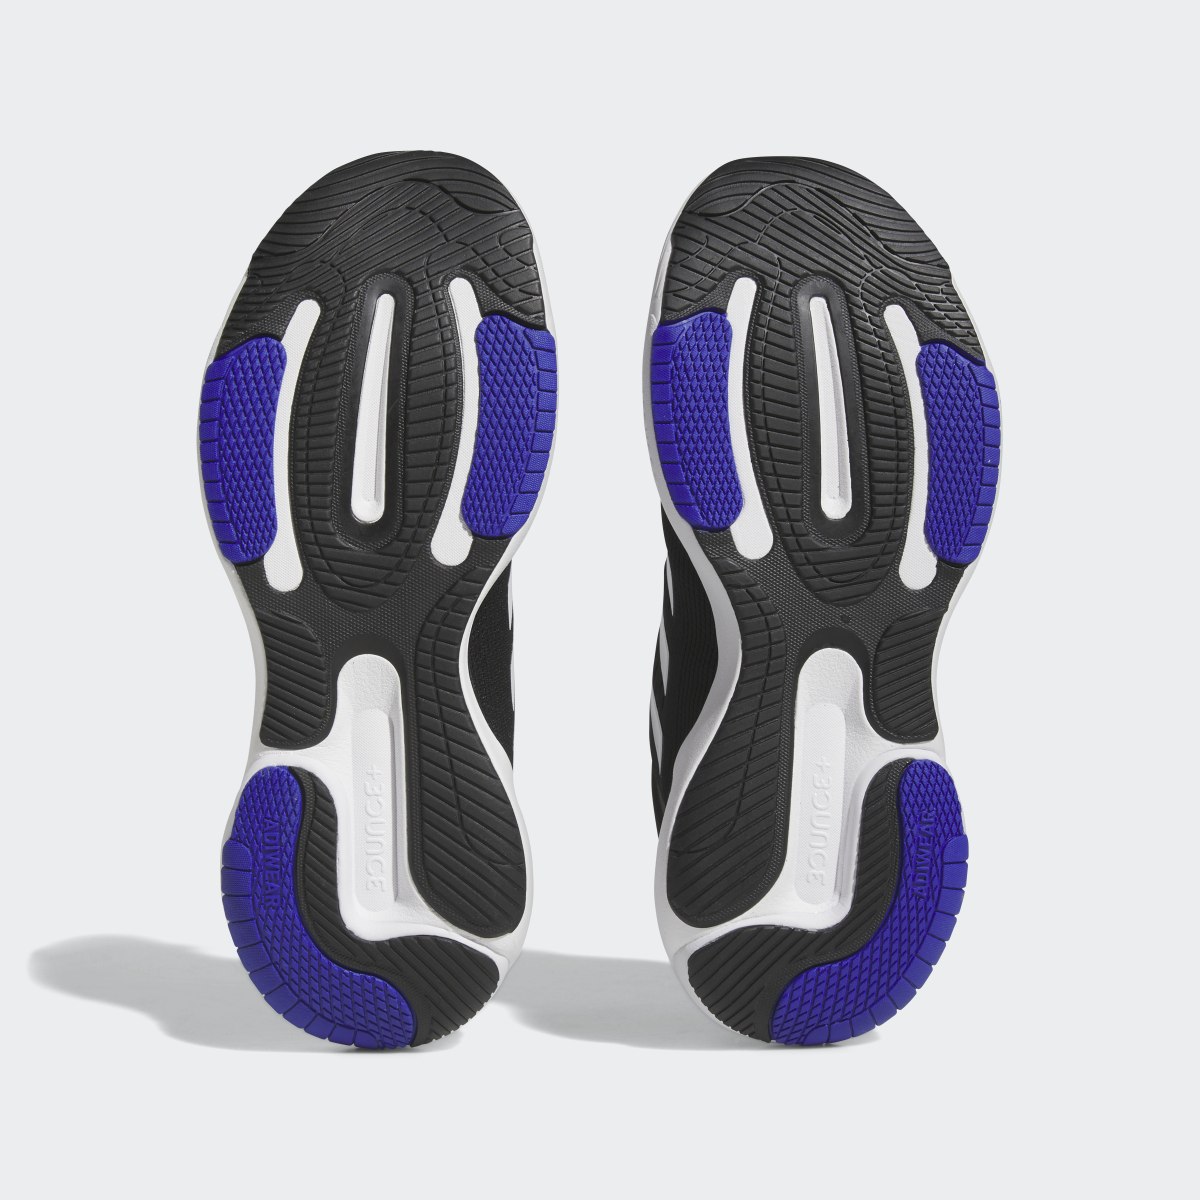 Adidas Response Super 3.0 Shoes. 4